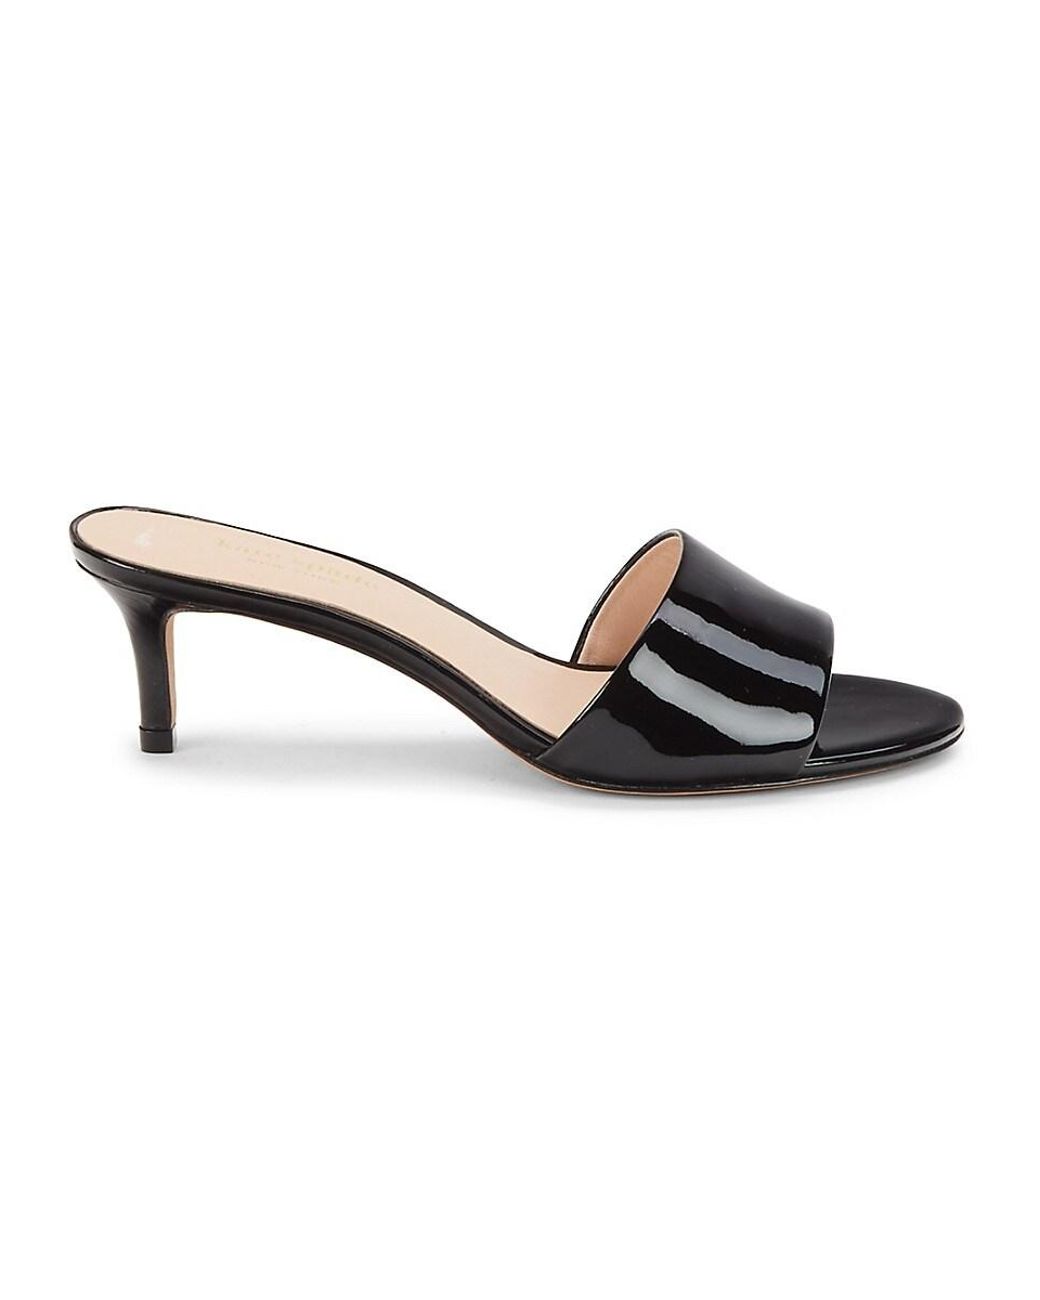 Kate Spade Savvi Patent Leather Kitten-heel Sandals in Black | Lyst